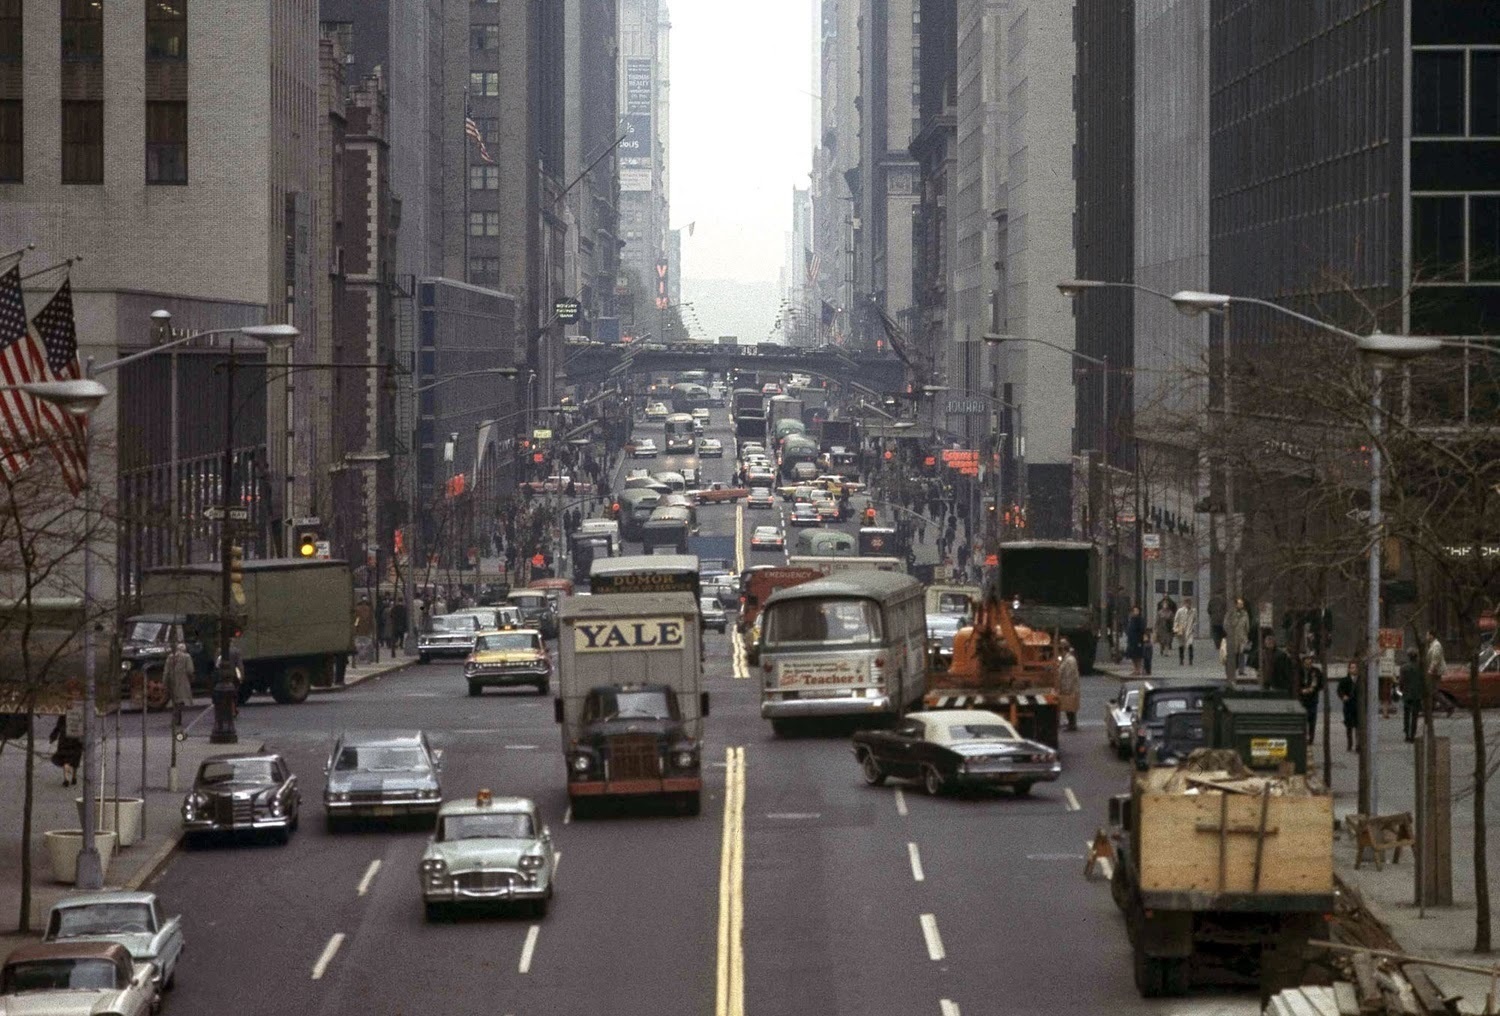 1965 new york - Yale